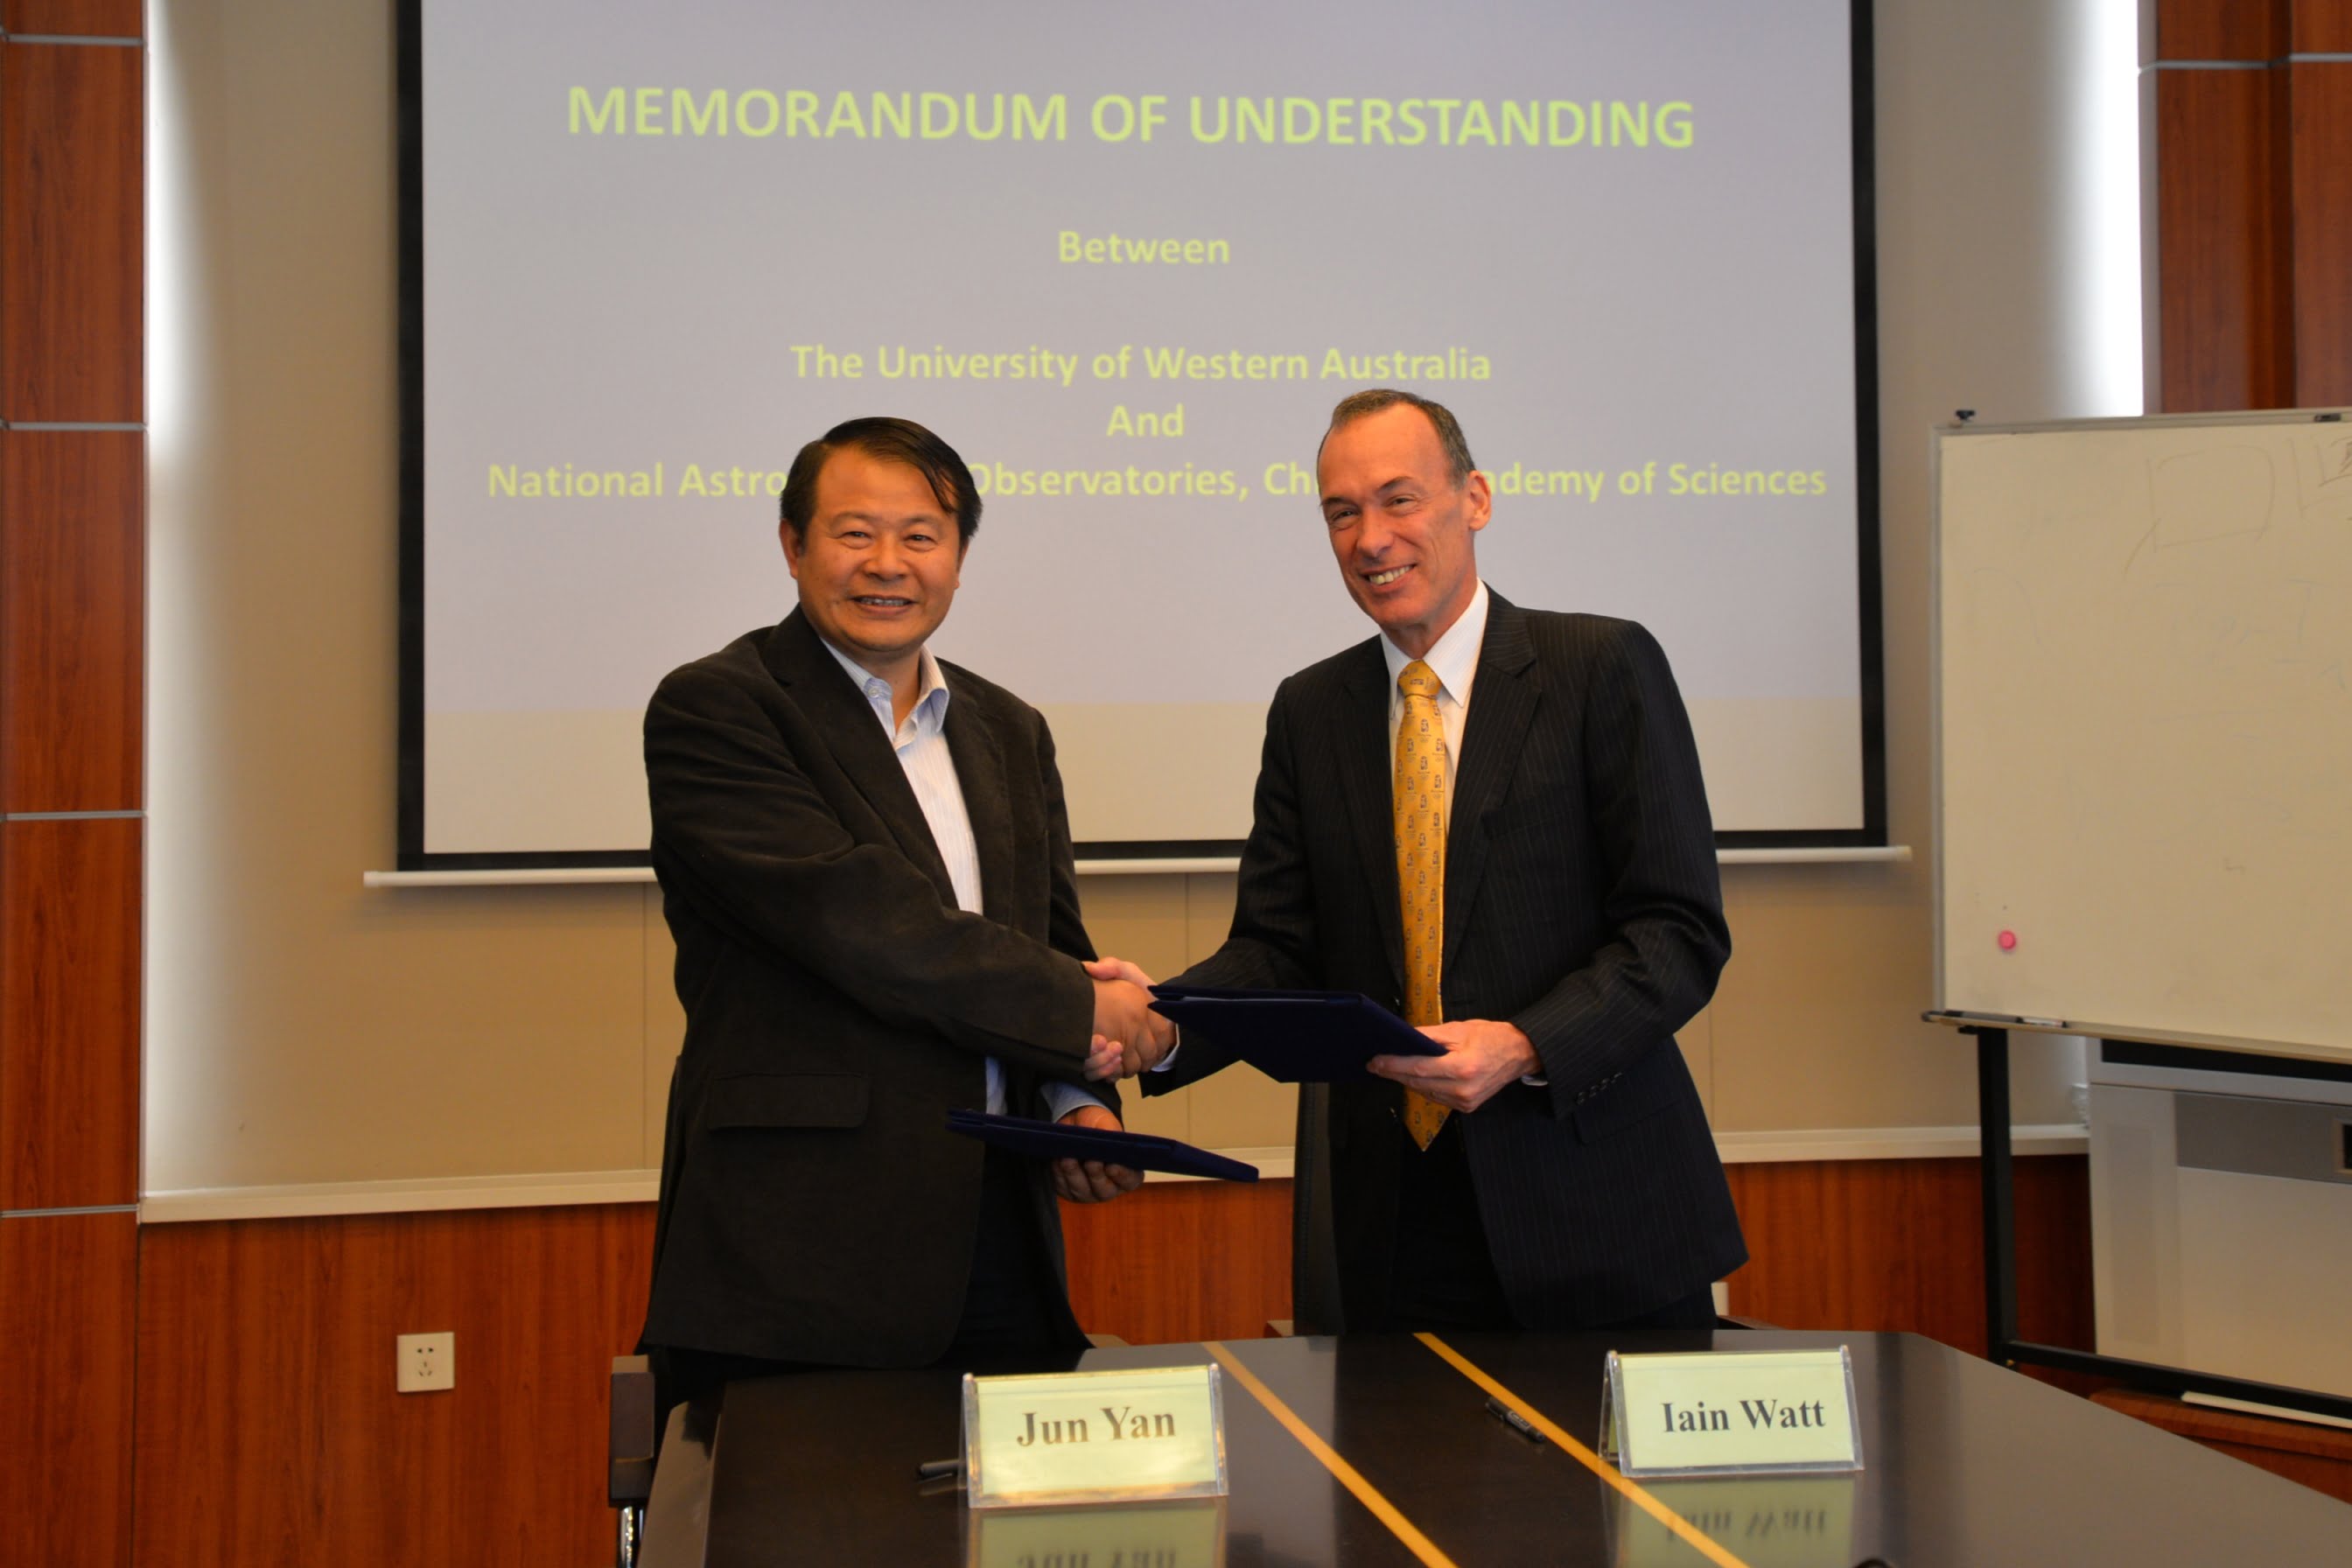 Professor Jun Yan, Director of the NAOC and Mr Iain Watt, UWA’s Pro Vice-Chancellor (International), sign the Memorandum of Understanding at a ceremony in Beijing.